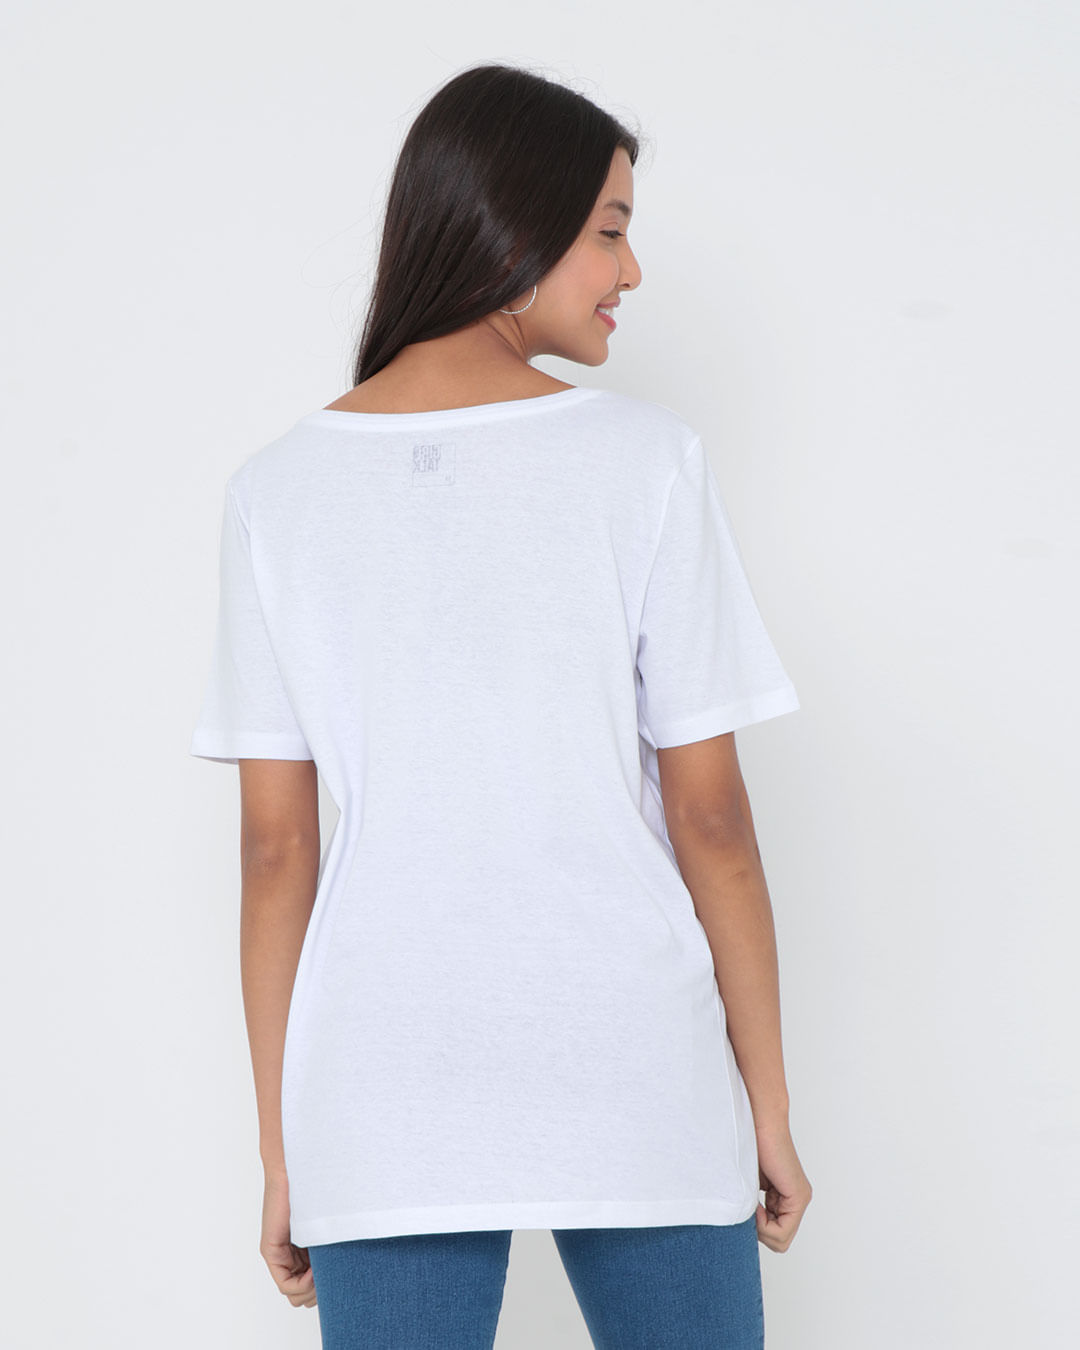 Camiseta-Over-Size---Branco